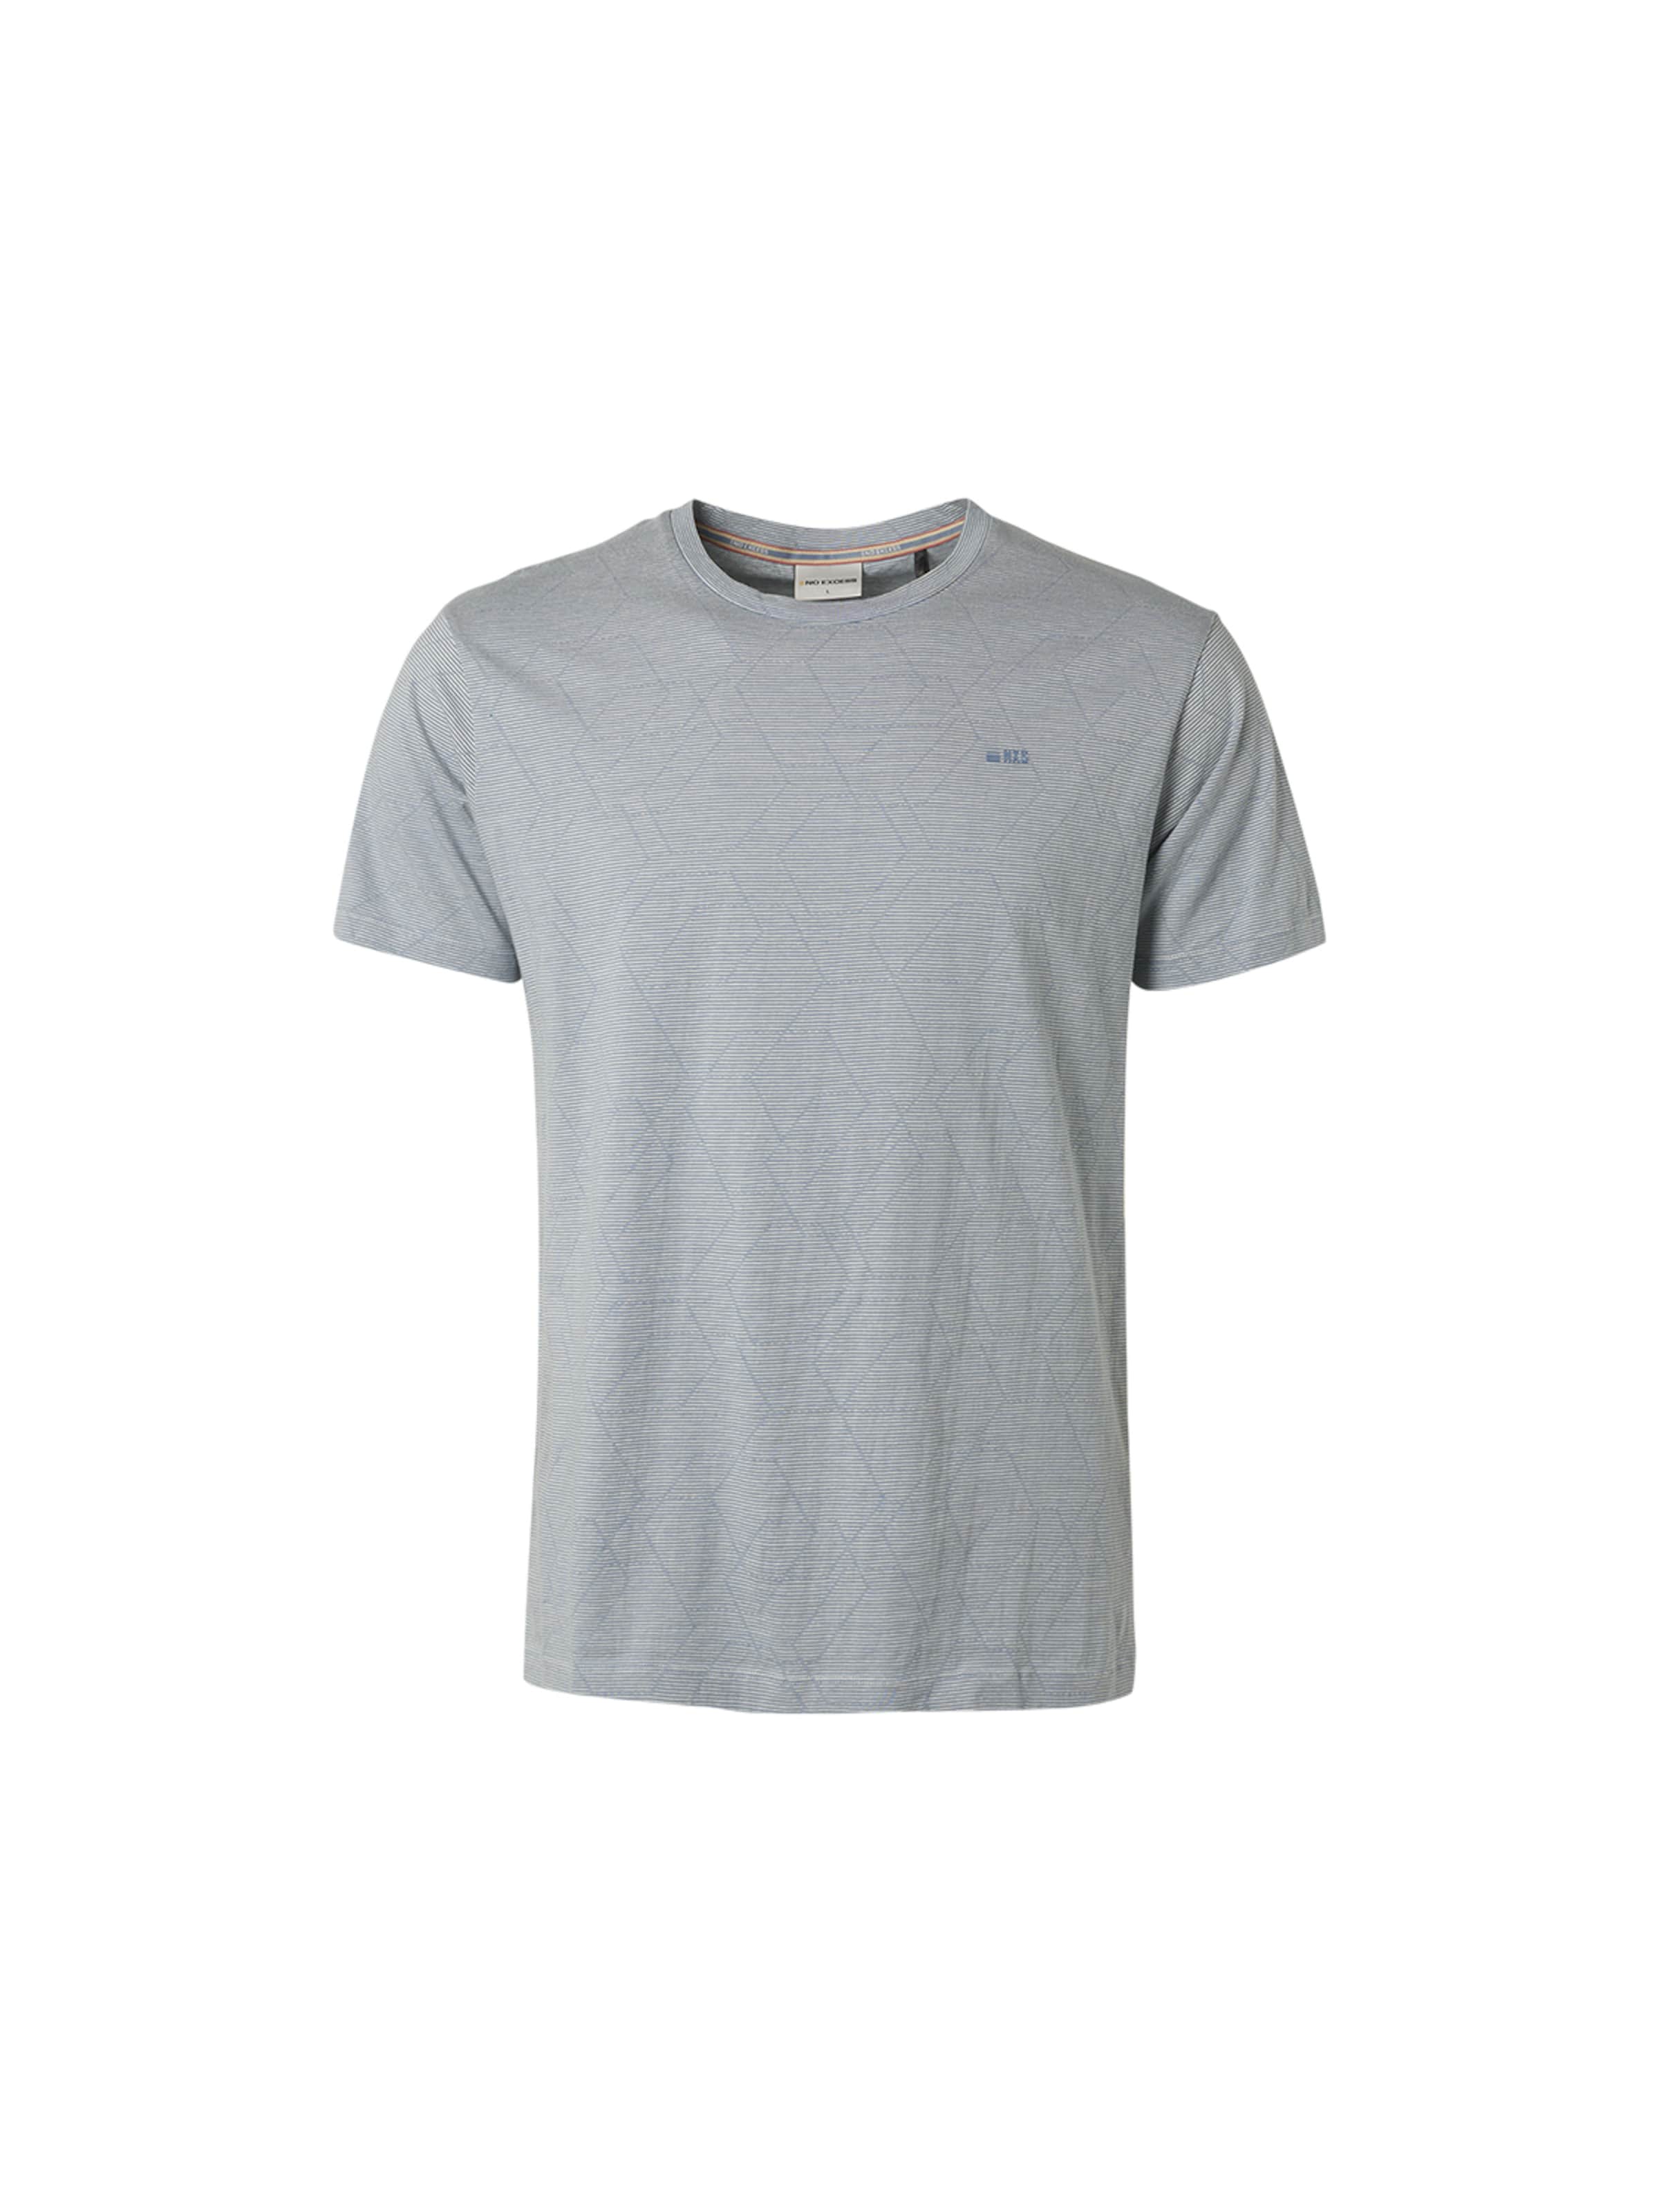 Männer Große Größen No Excess Shirt in Grau - KT59075